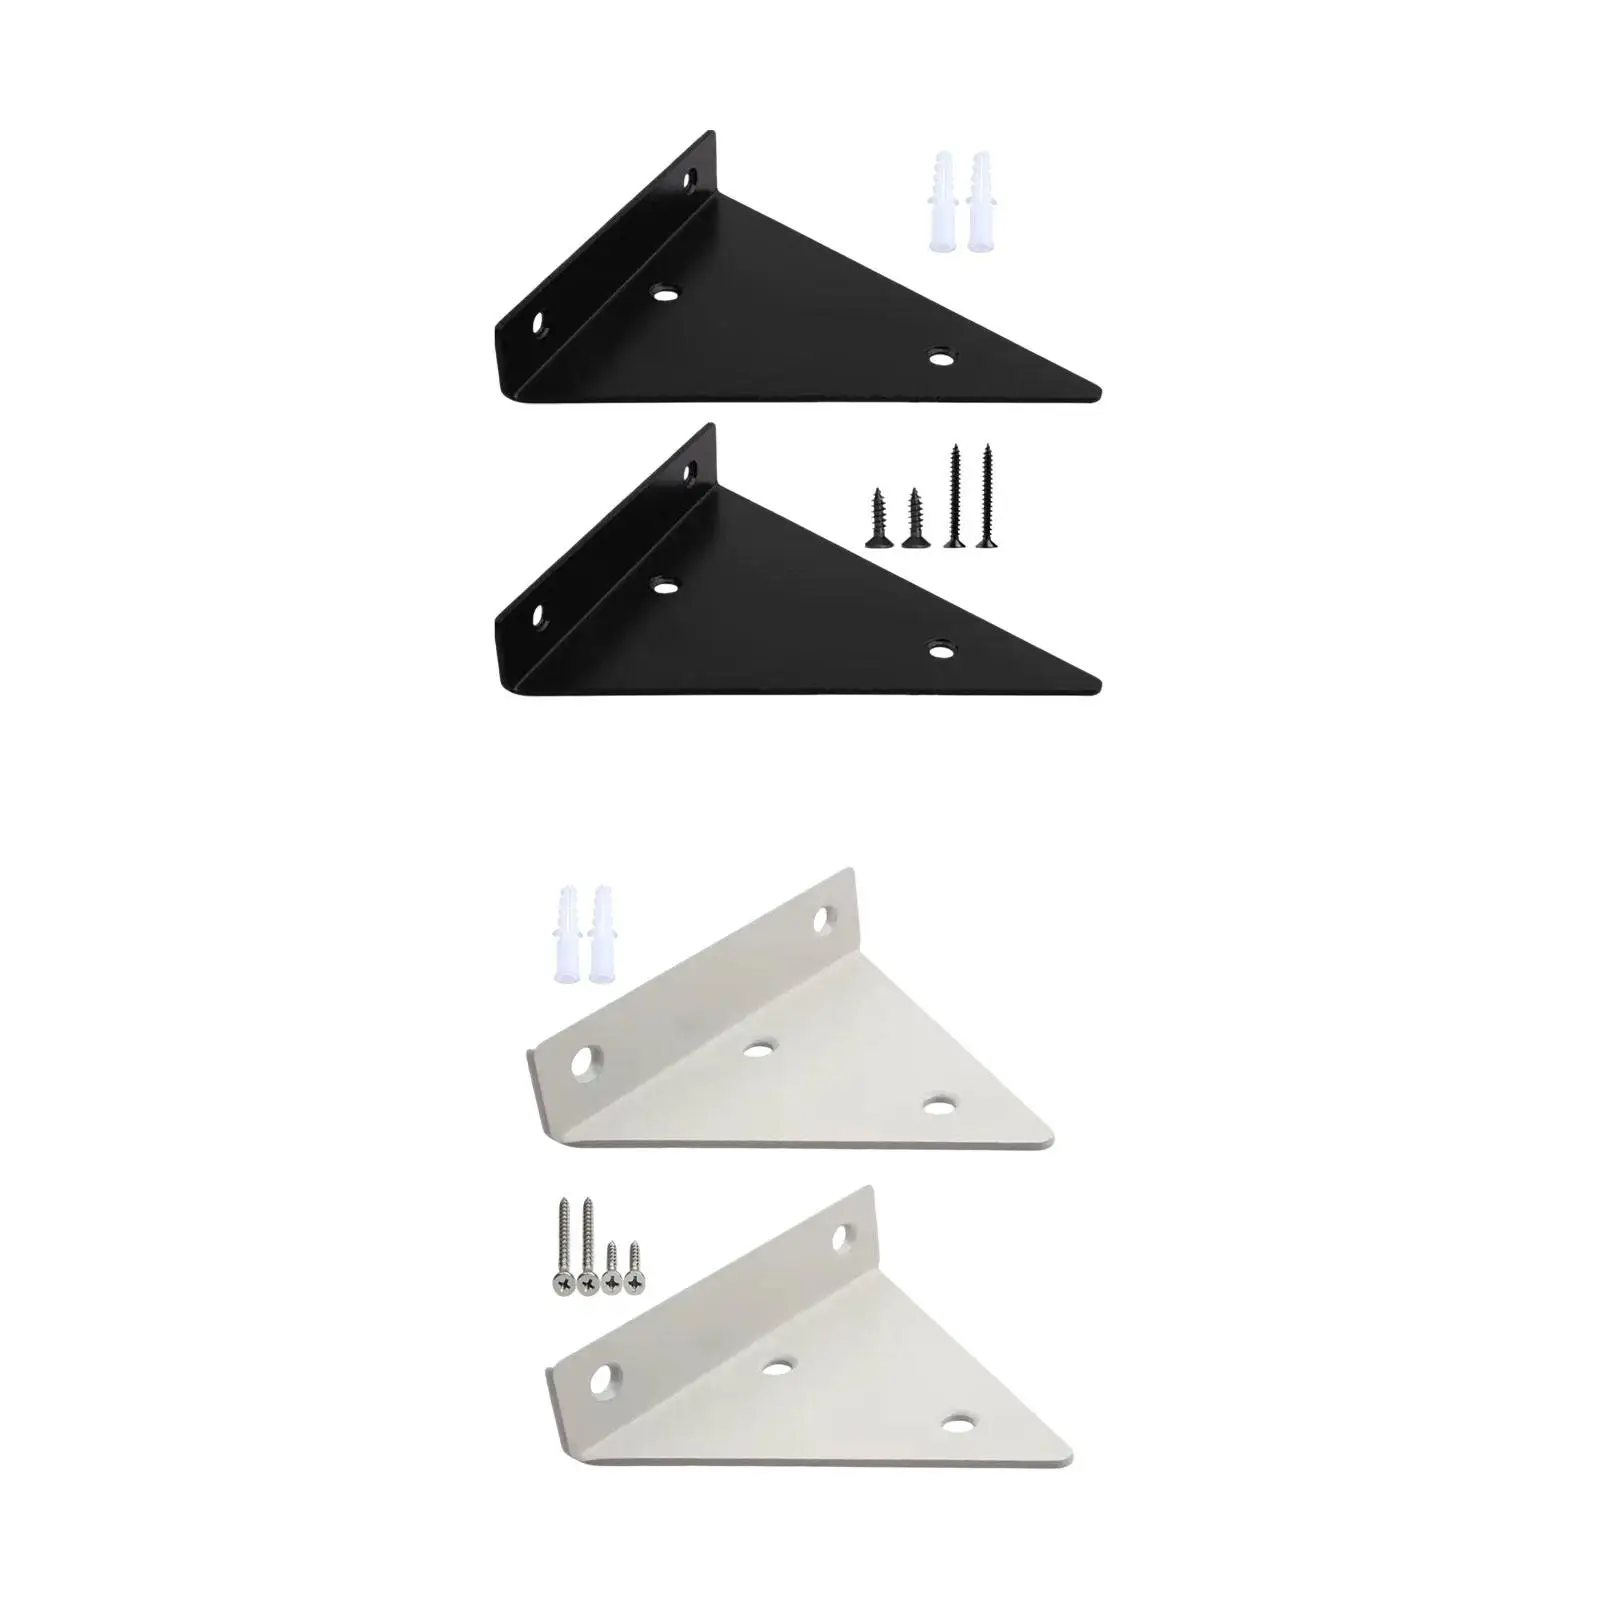 Shelf Bracket Ornament Triangle Easy to Install Modern DIY Hardware Floating Shelf Brackets Shelf Supports for Home Garage Store